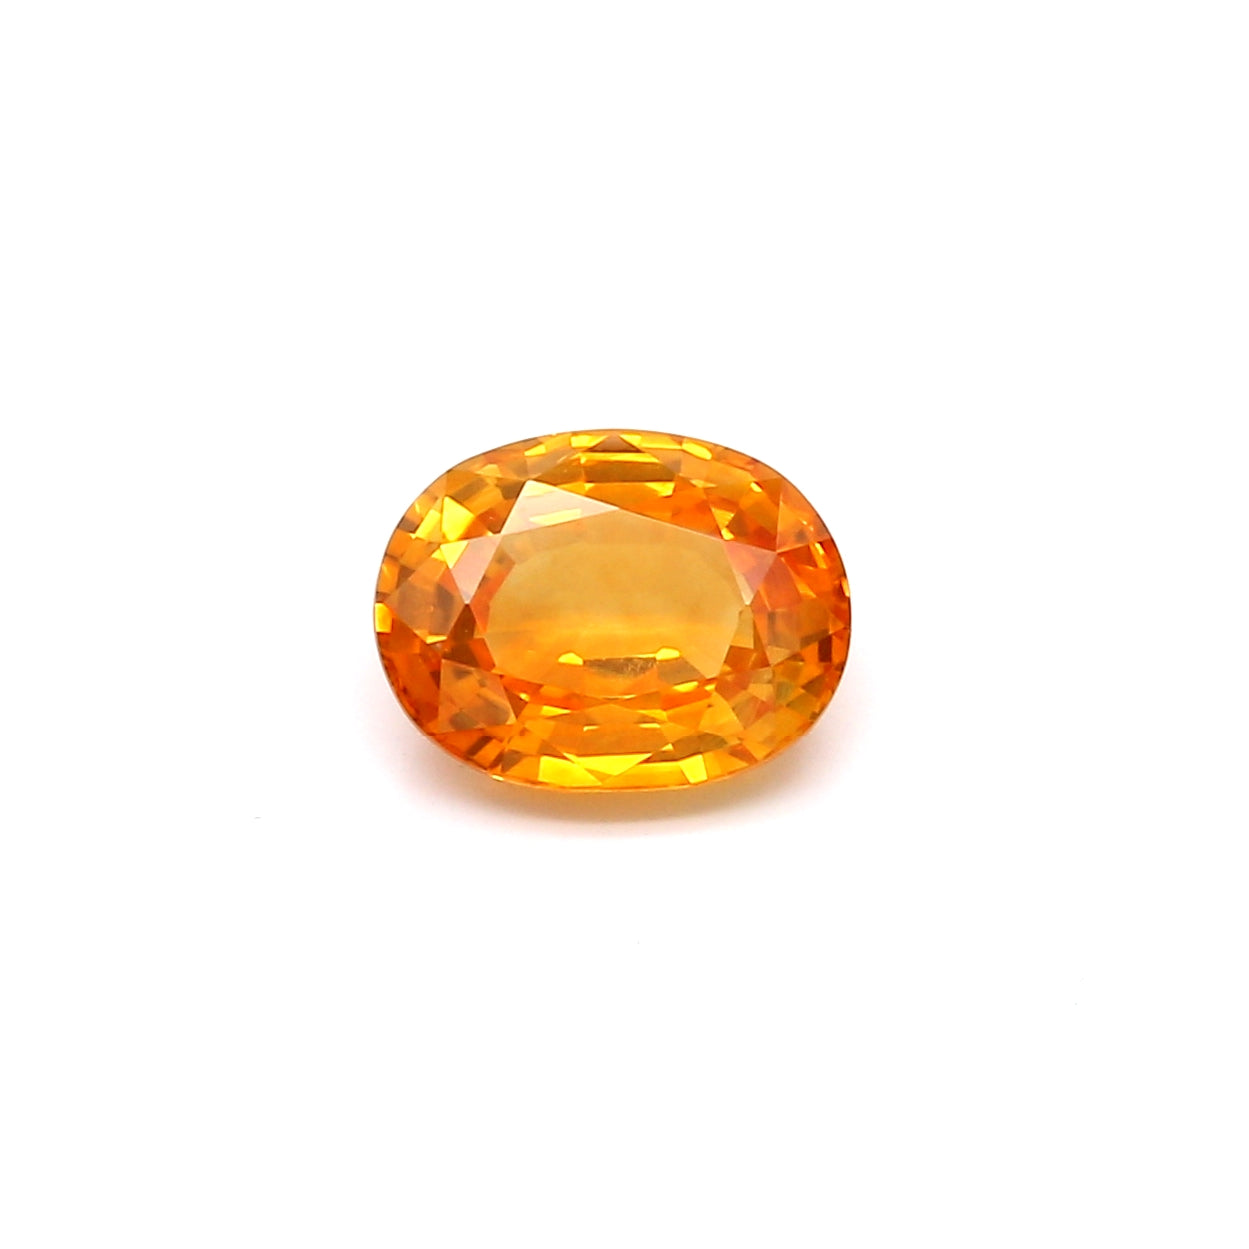 1.83ct Yellowish Orange, Oval Sapphire, Heated, Sri Lanka - 8.31 x 6.48 x 3.66mm